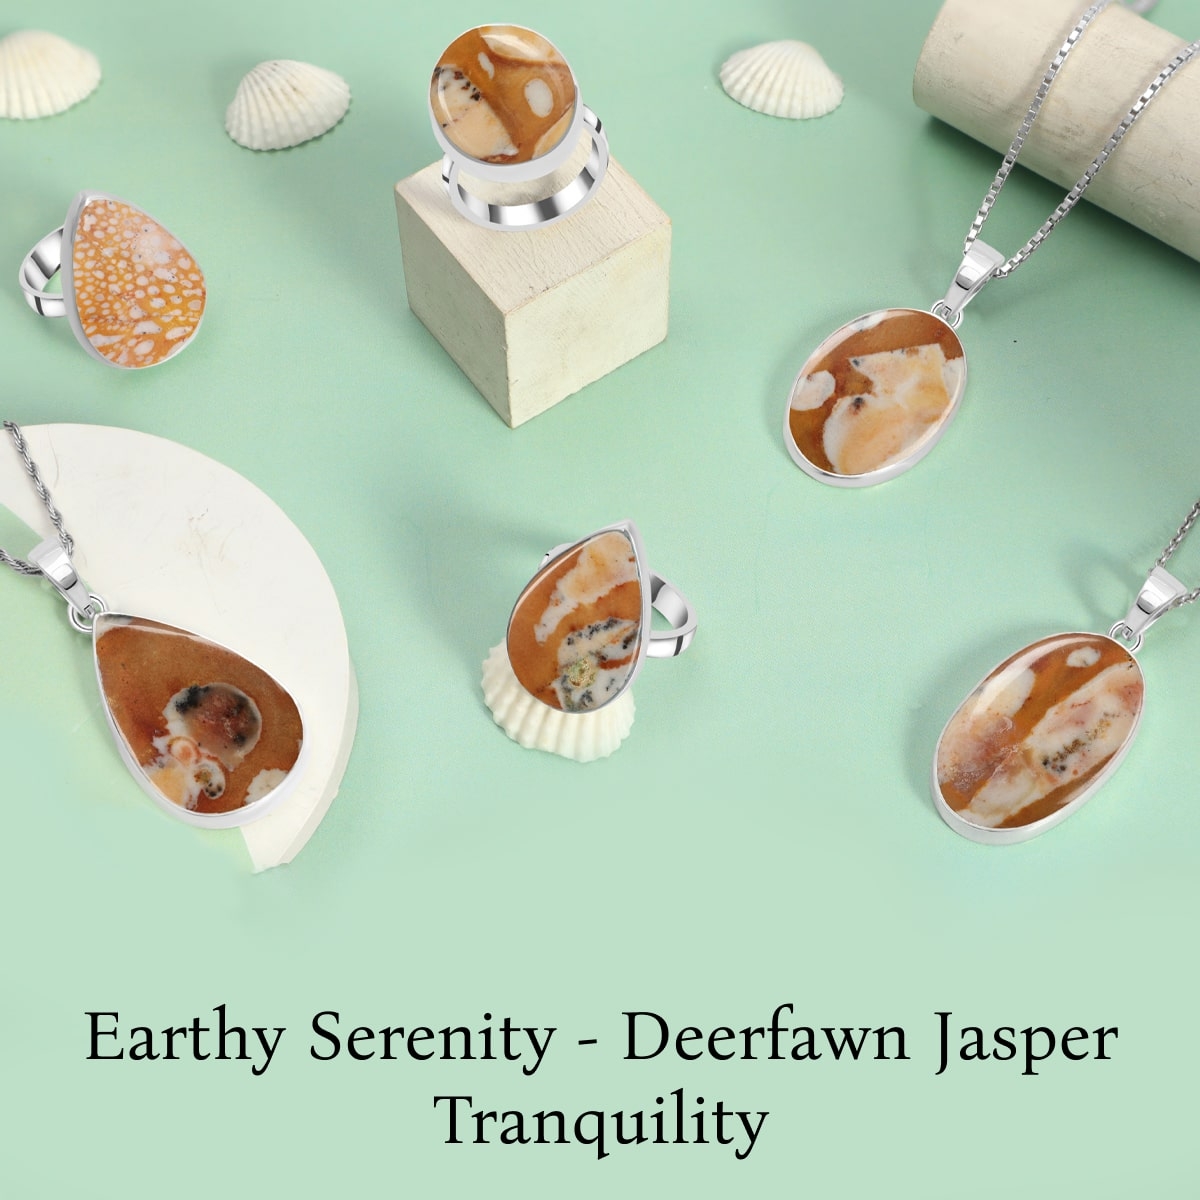 Deerfawn Jasper Tranquility: Nature's Art in Earthy Tones